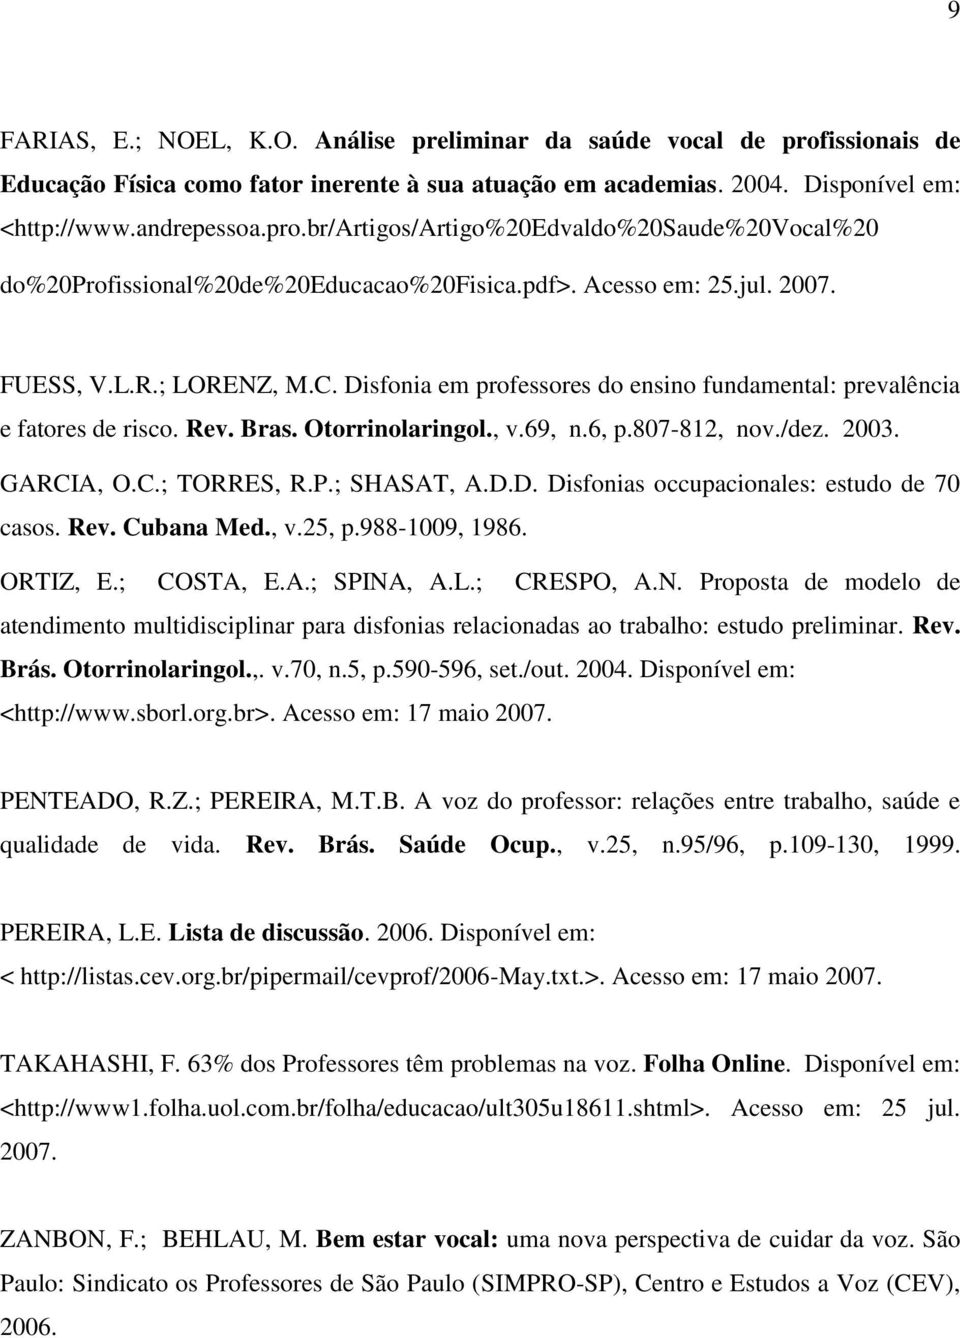 2003. GARCIA, O.C.; TORRES, R.P.; SHASAT, A.D.D. Disfonias occupacionales: estudo de 70 casos. Rev. Cubana Med., v.25, p.988-1009, 1986. ORTIZ, E.; COSTA, E.A.; SPINA